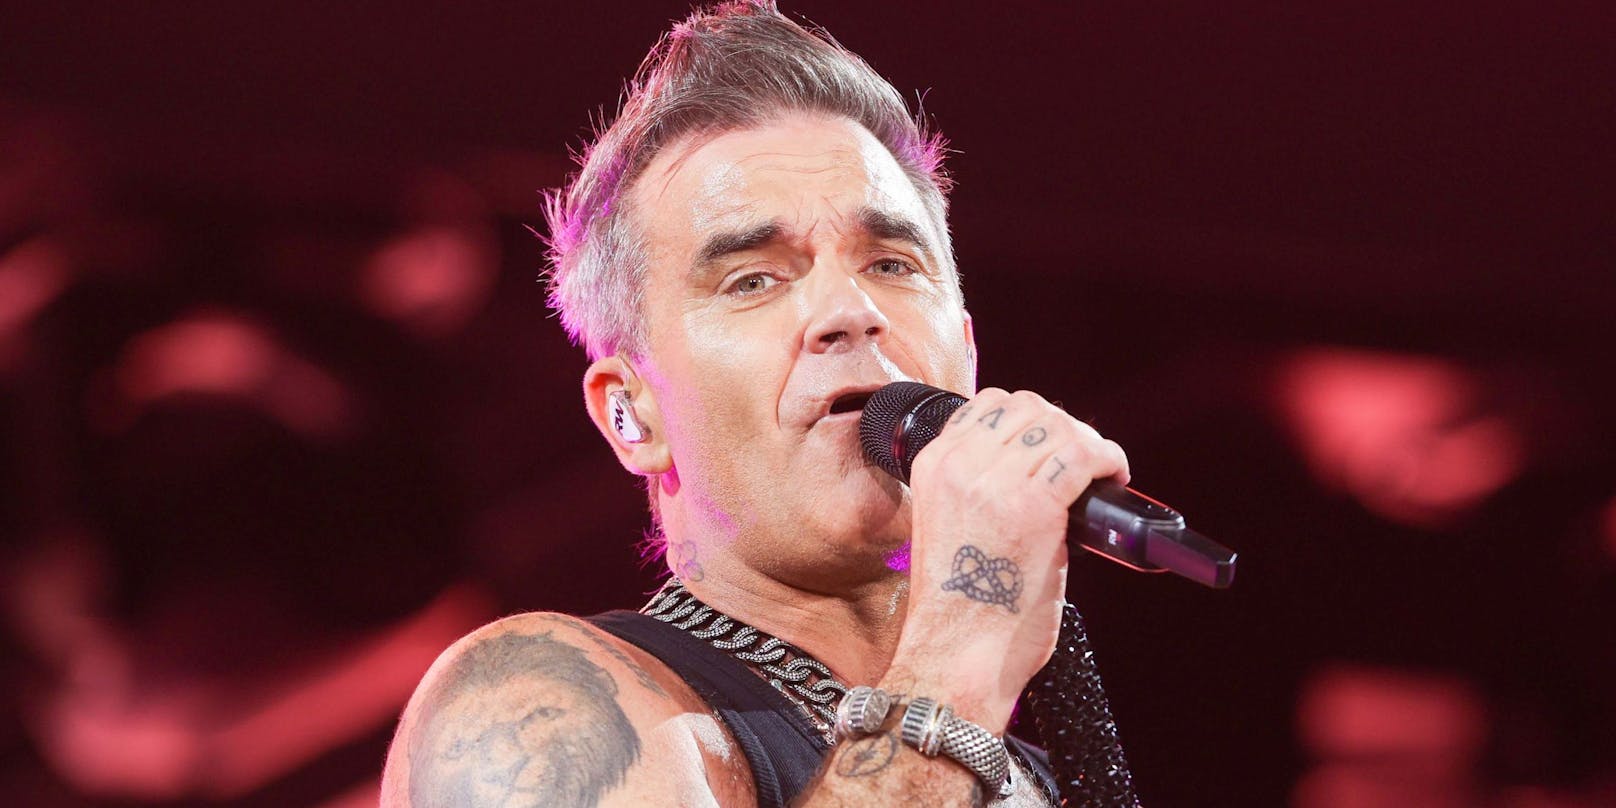 Sänger <strong>Robbie Williams</strong>&nbsp;("Let me entertain you") zieht erneut blank.